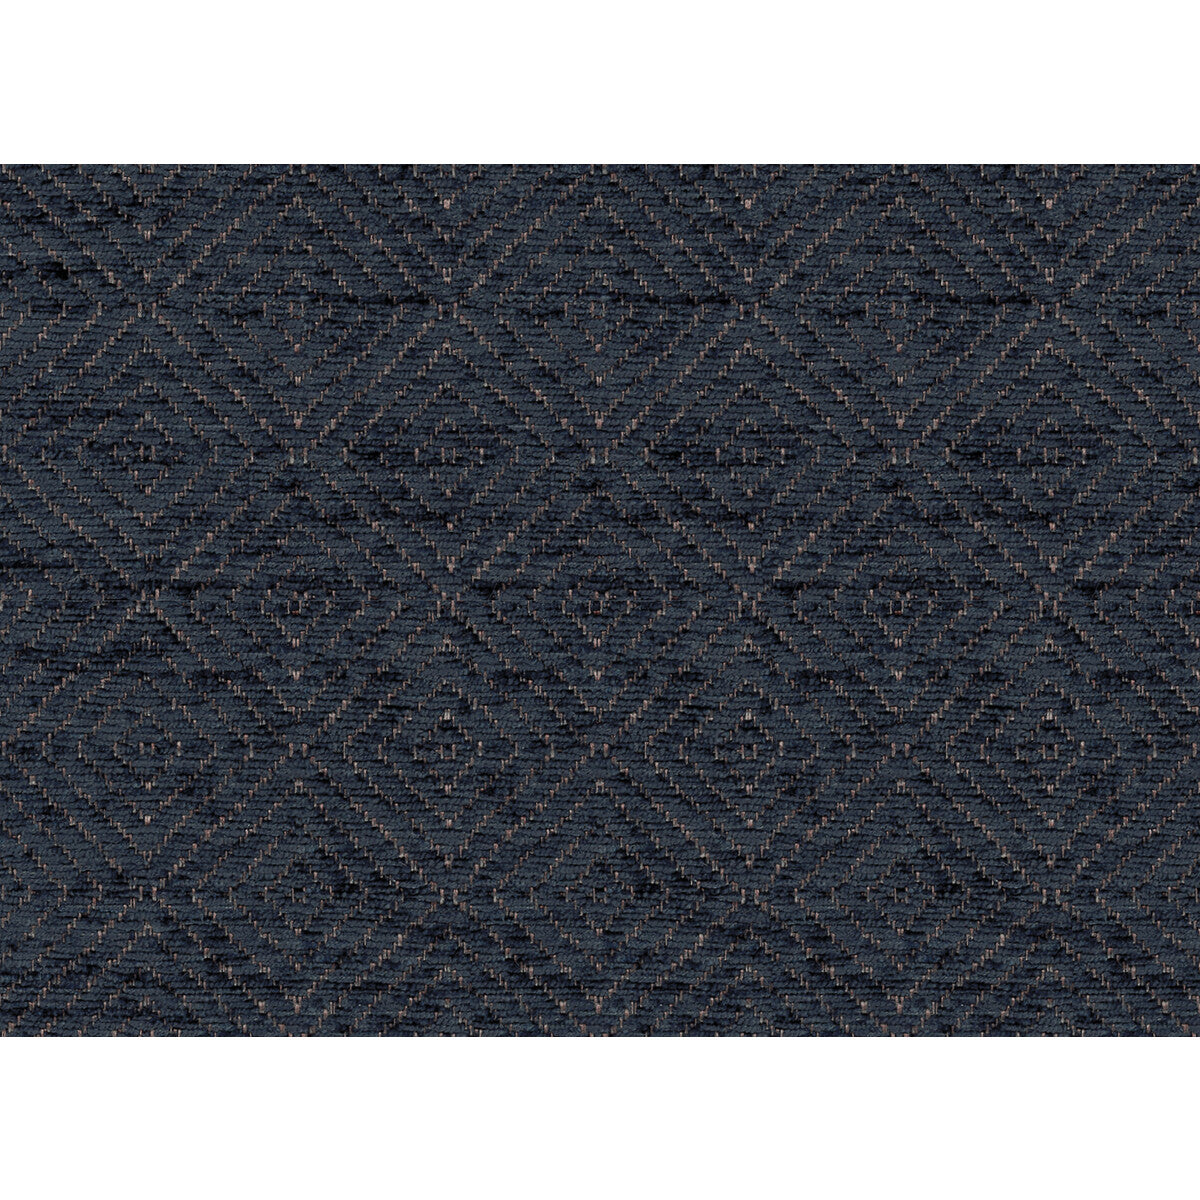 Kravet Smart fabric in 34345-50 color - pattern 34345.50.0 - by Kravet Smart